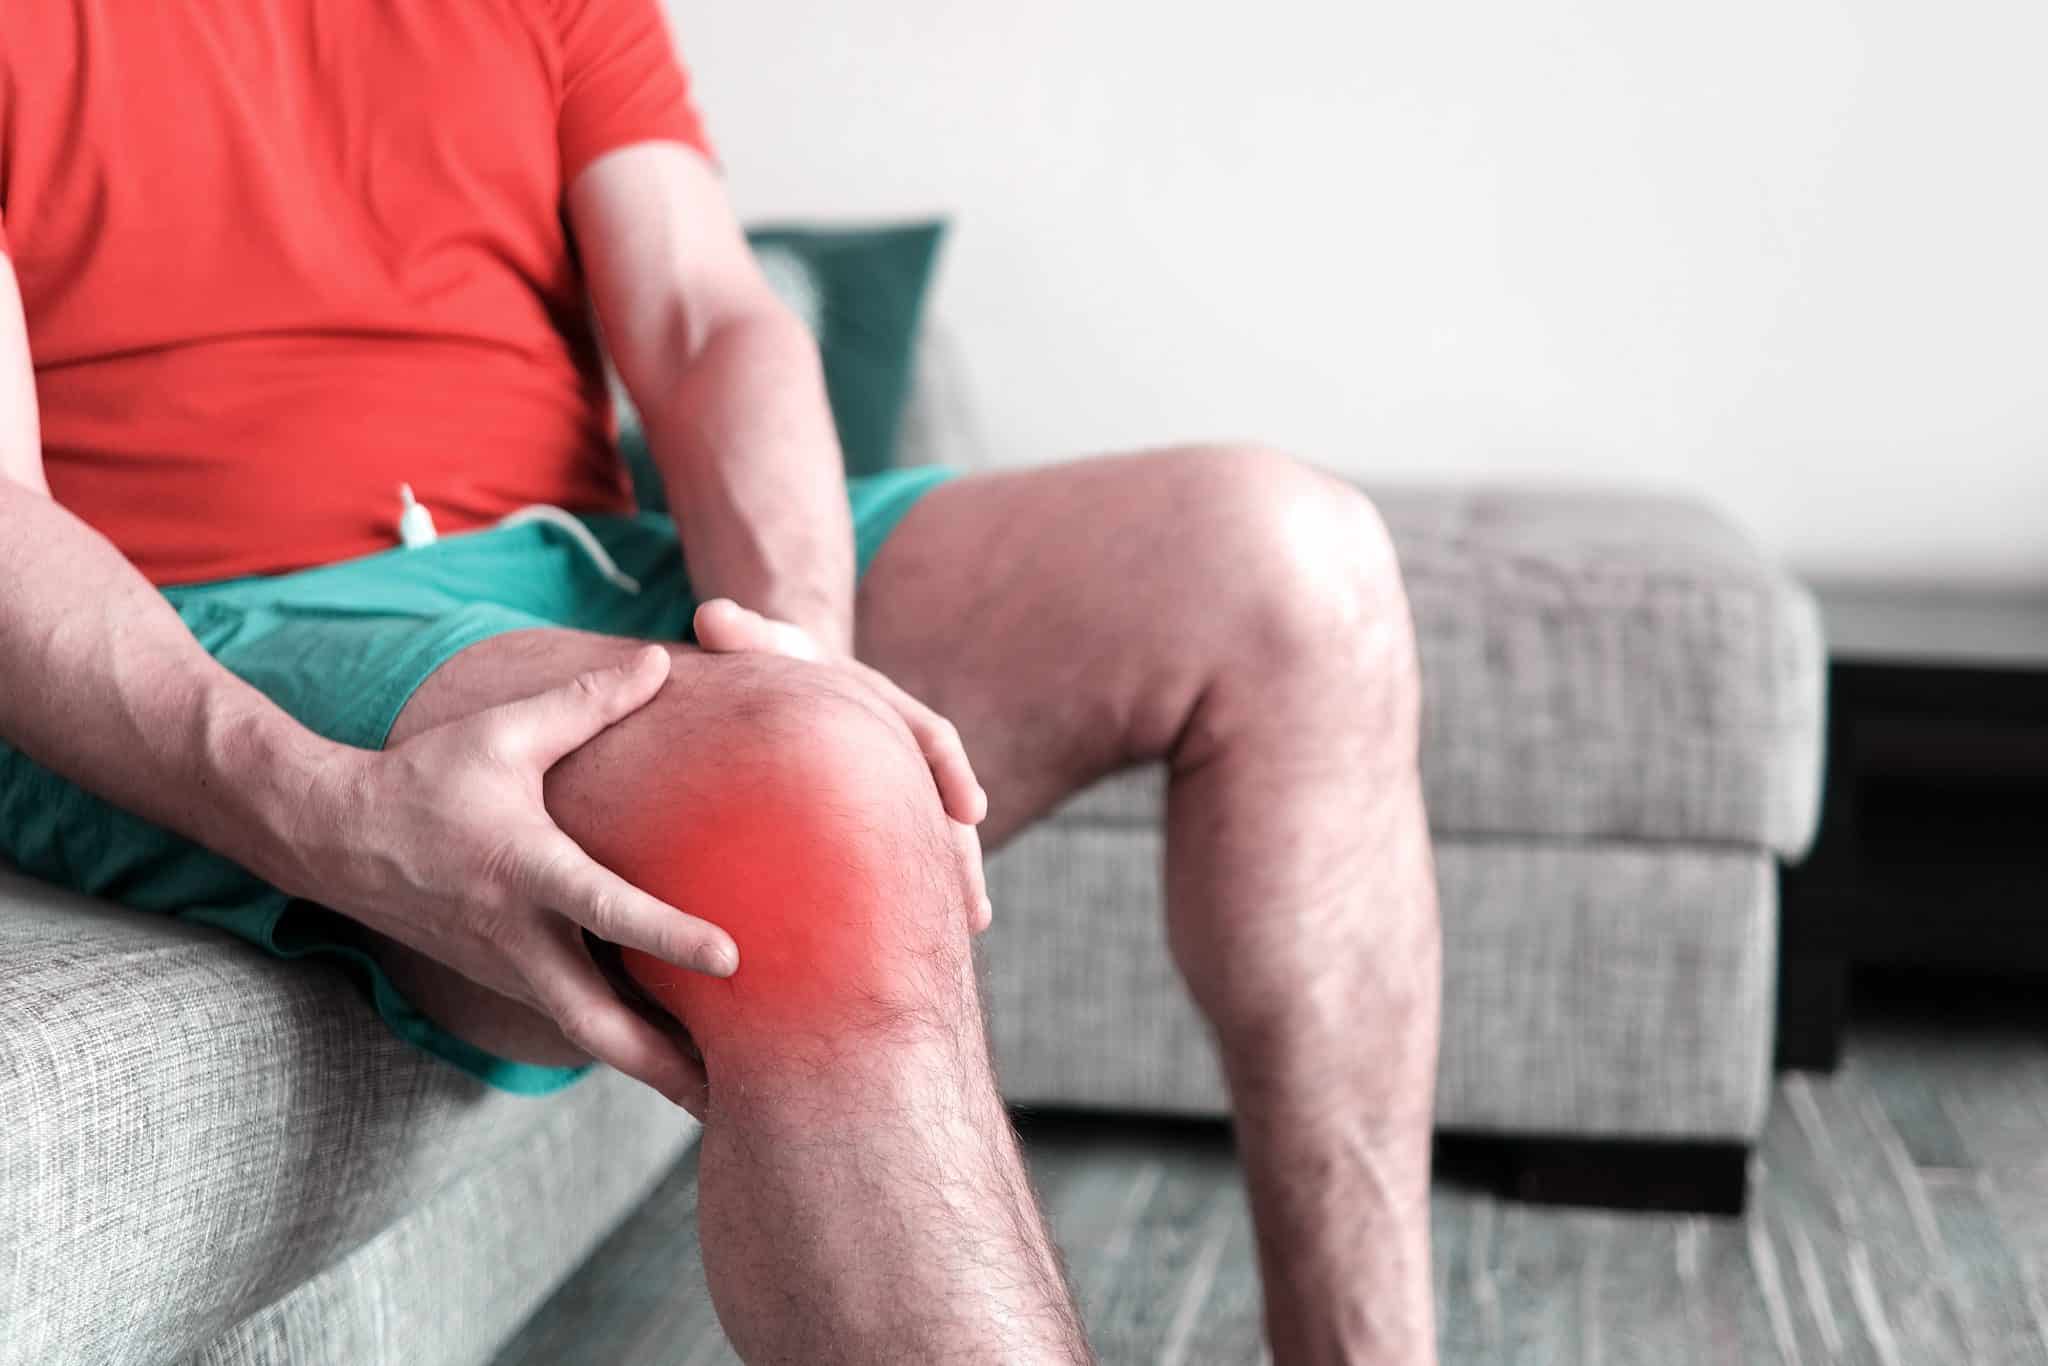 Arthritis knee